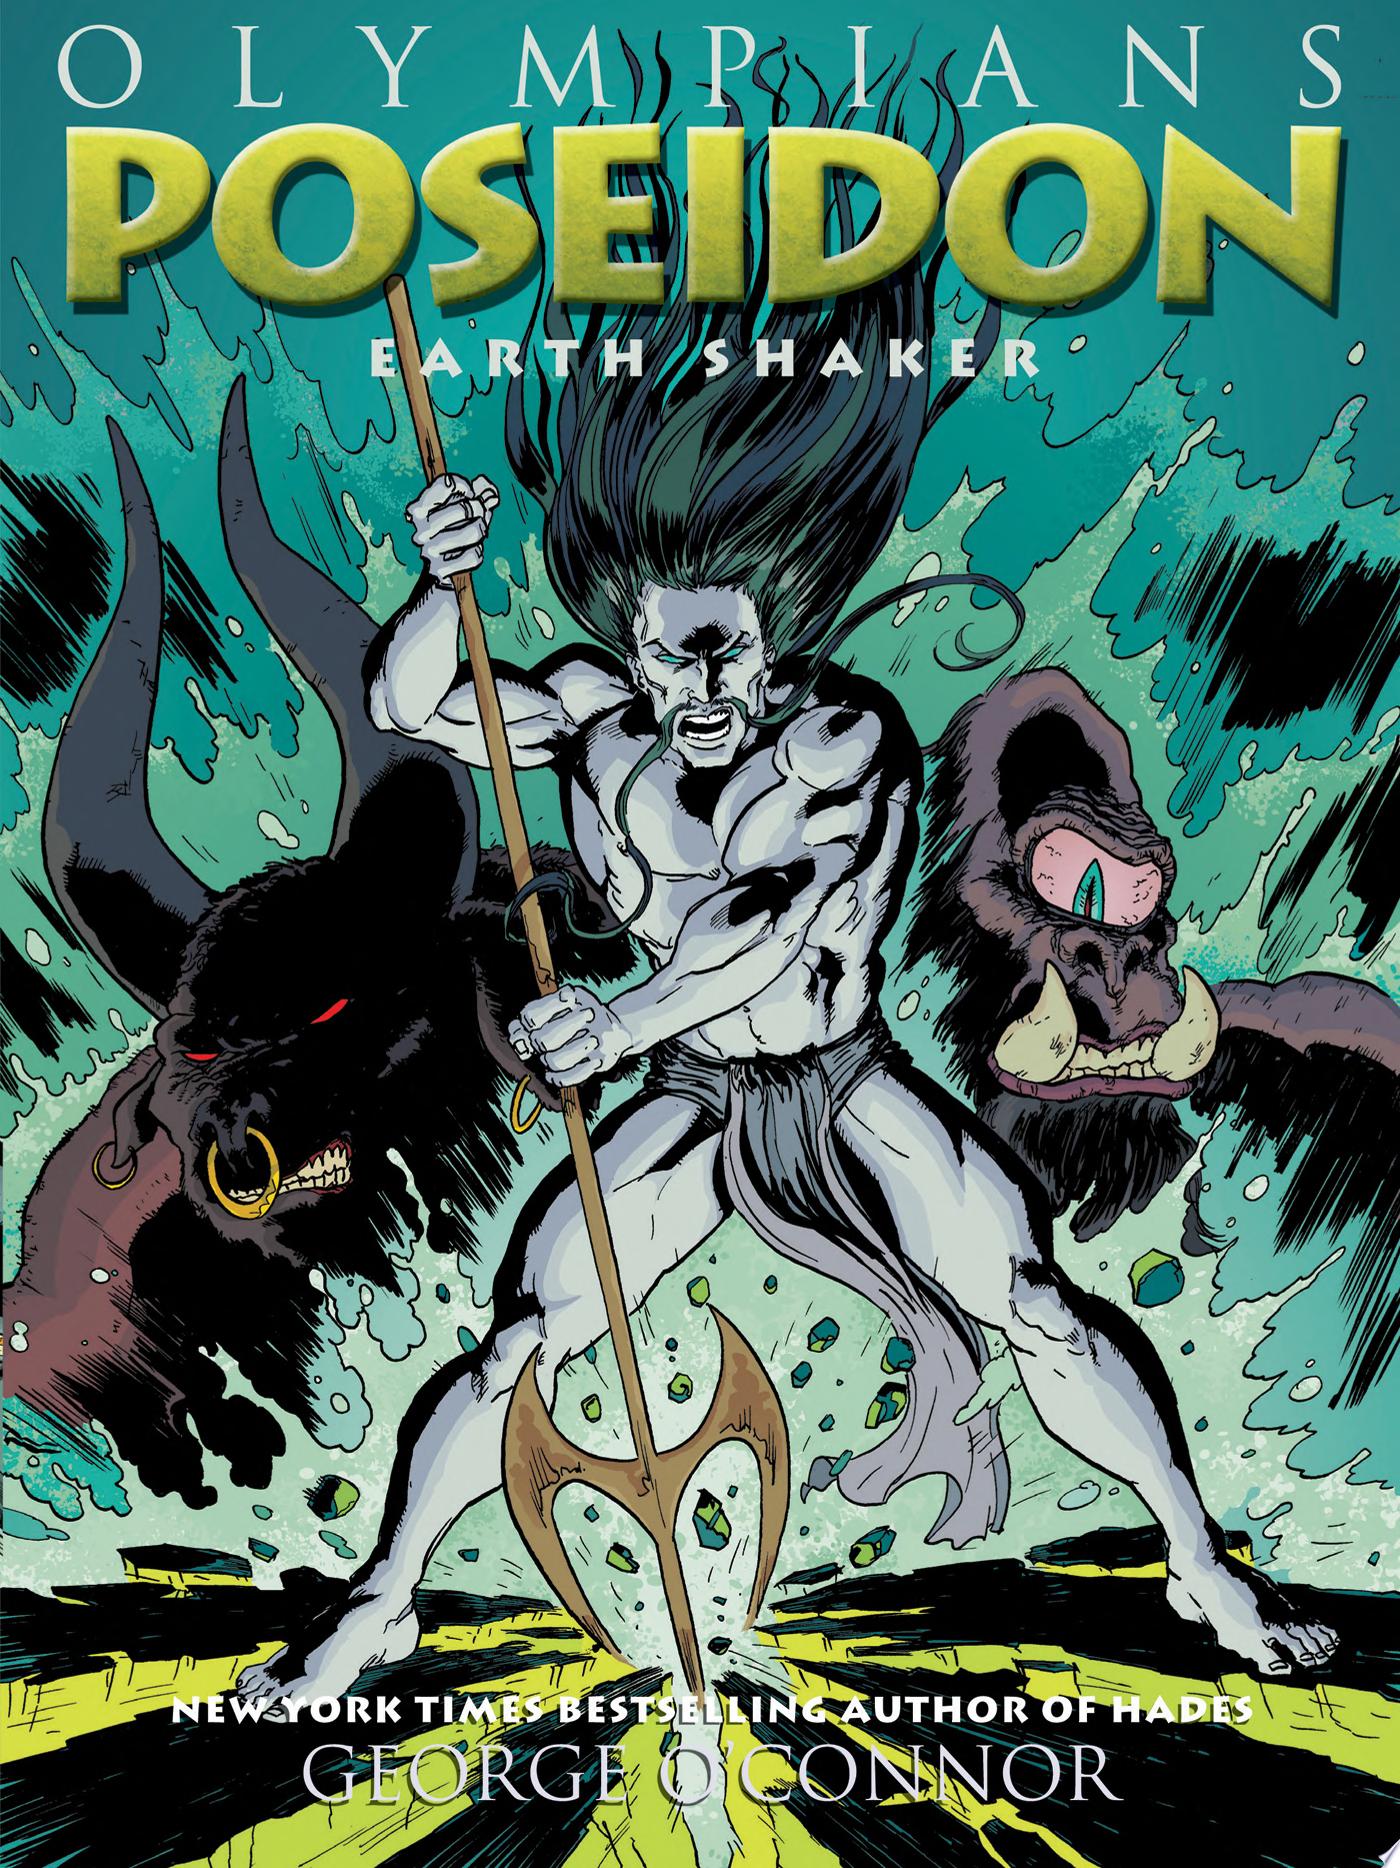 Image for "Poseidon"